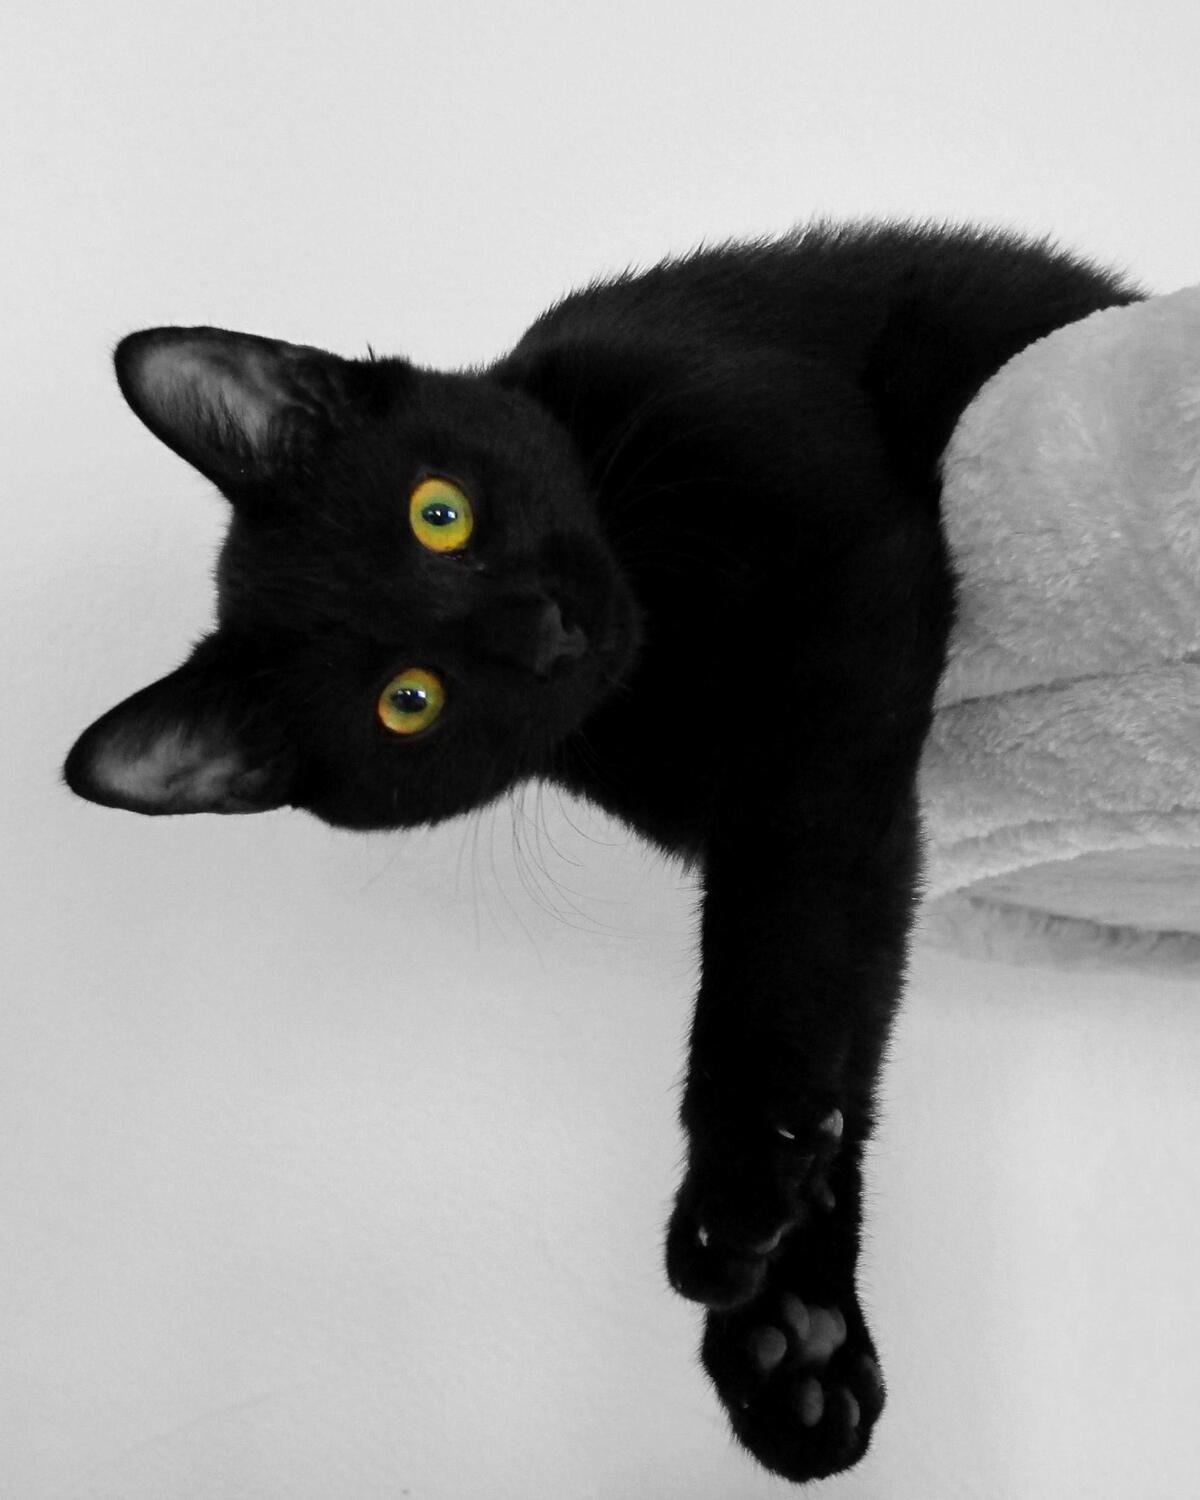 Lazy black cat on white background